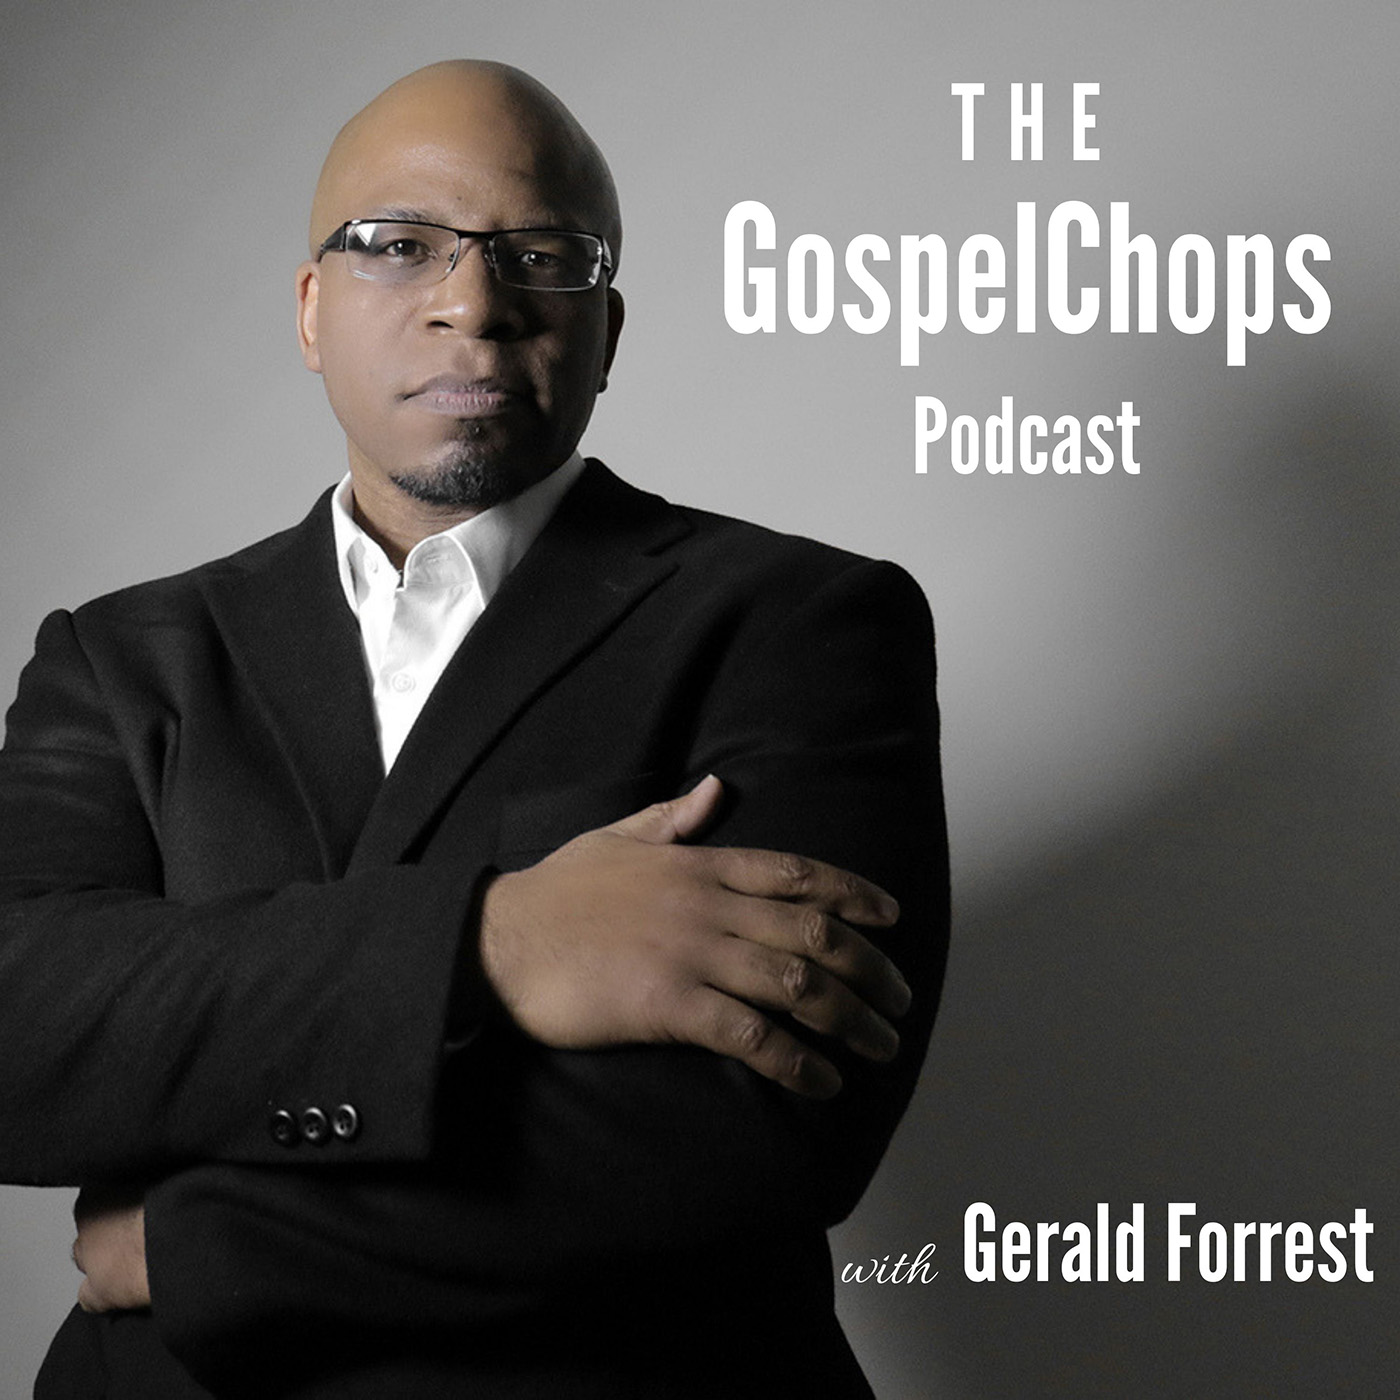 The GospelChops Podcast